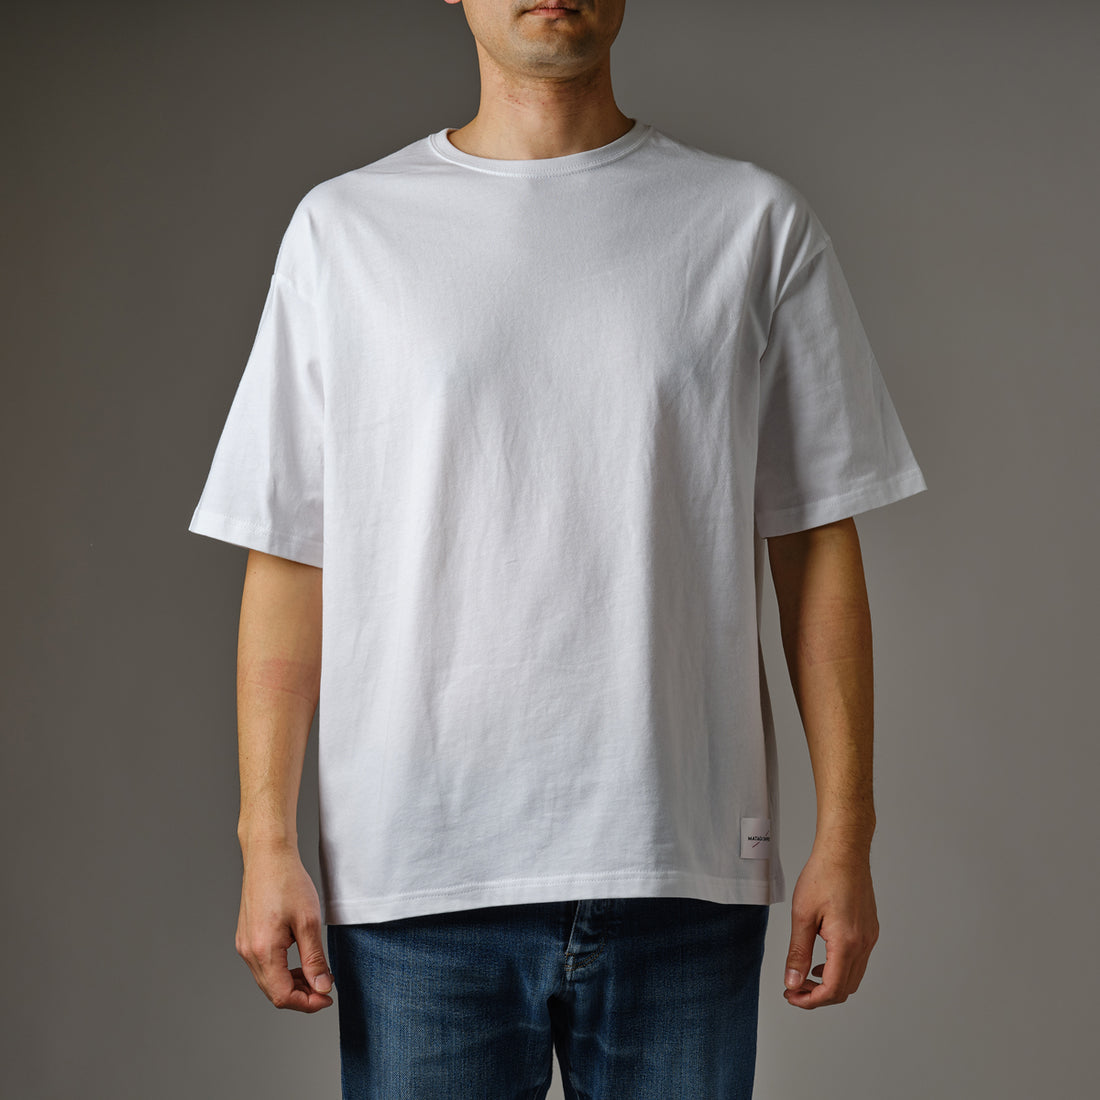 "CLASSIC LOGO" back print T-shirt